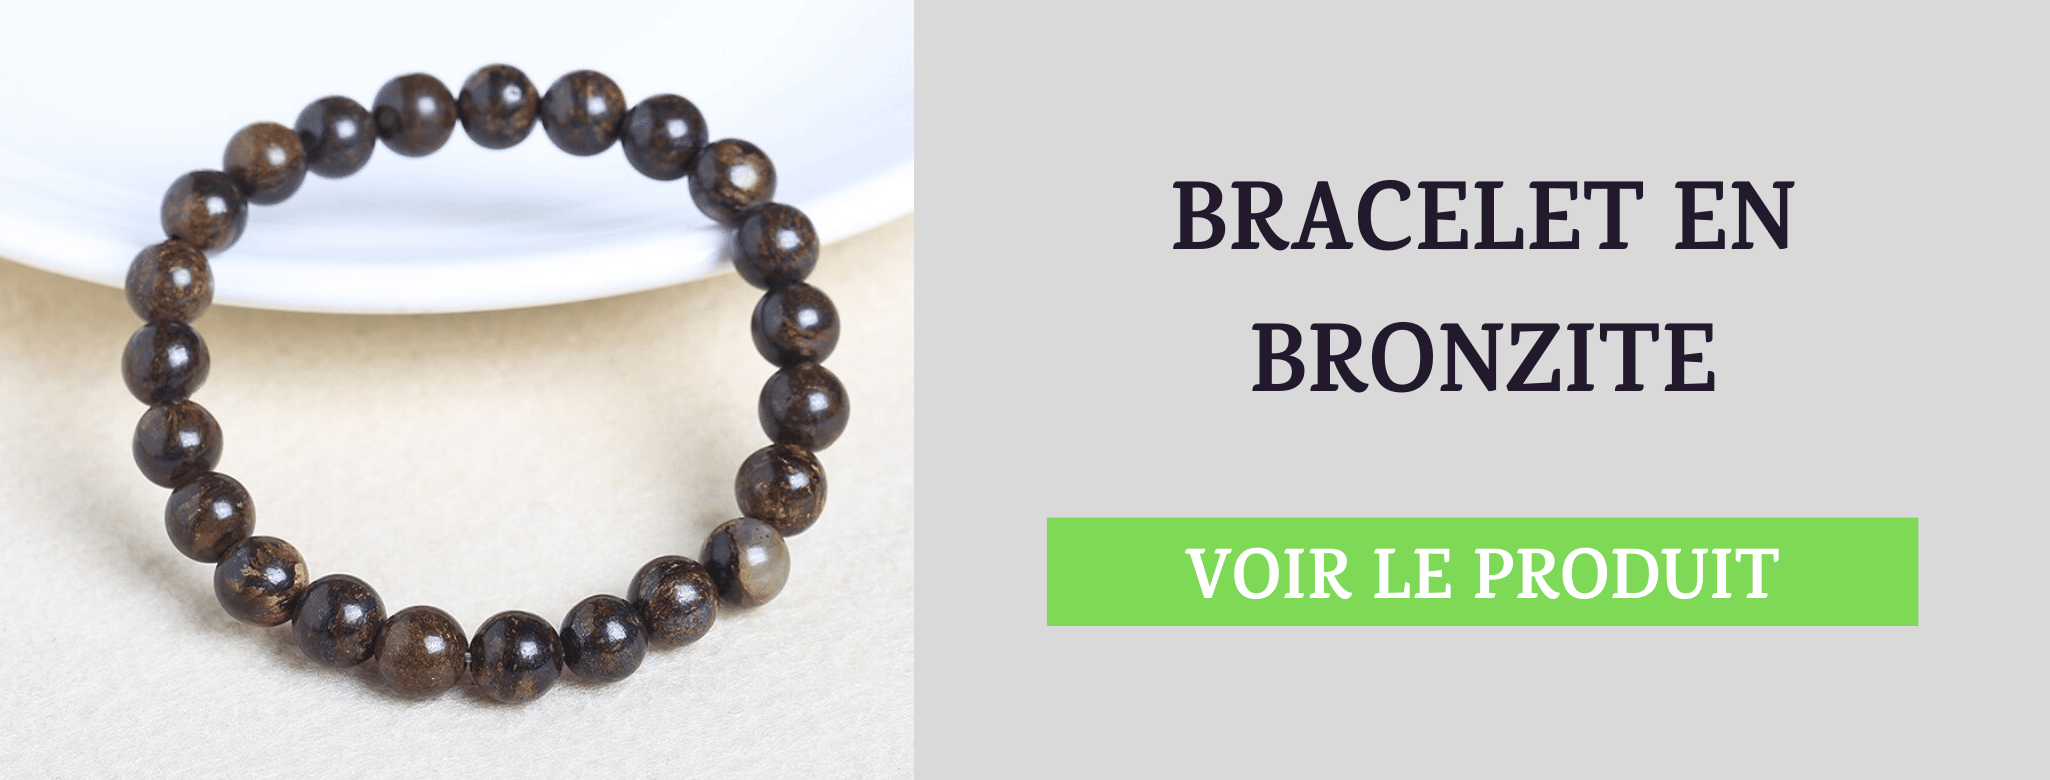 Bracelet Bronzite Boutons